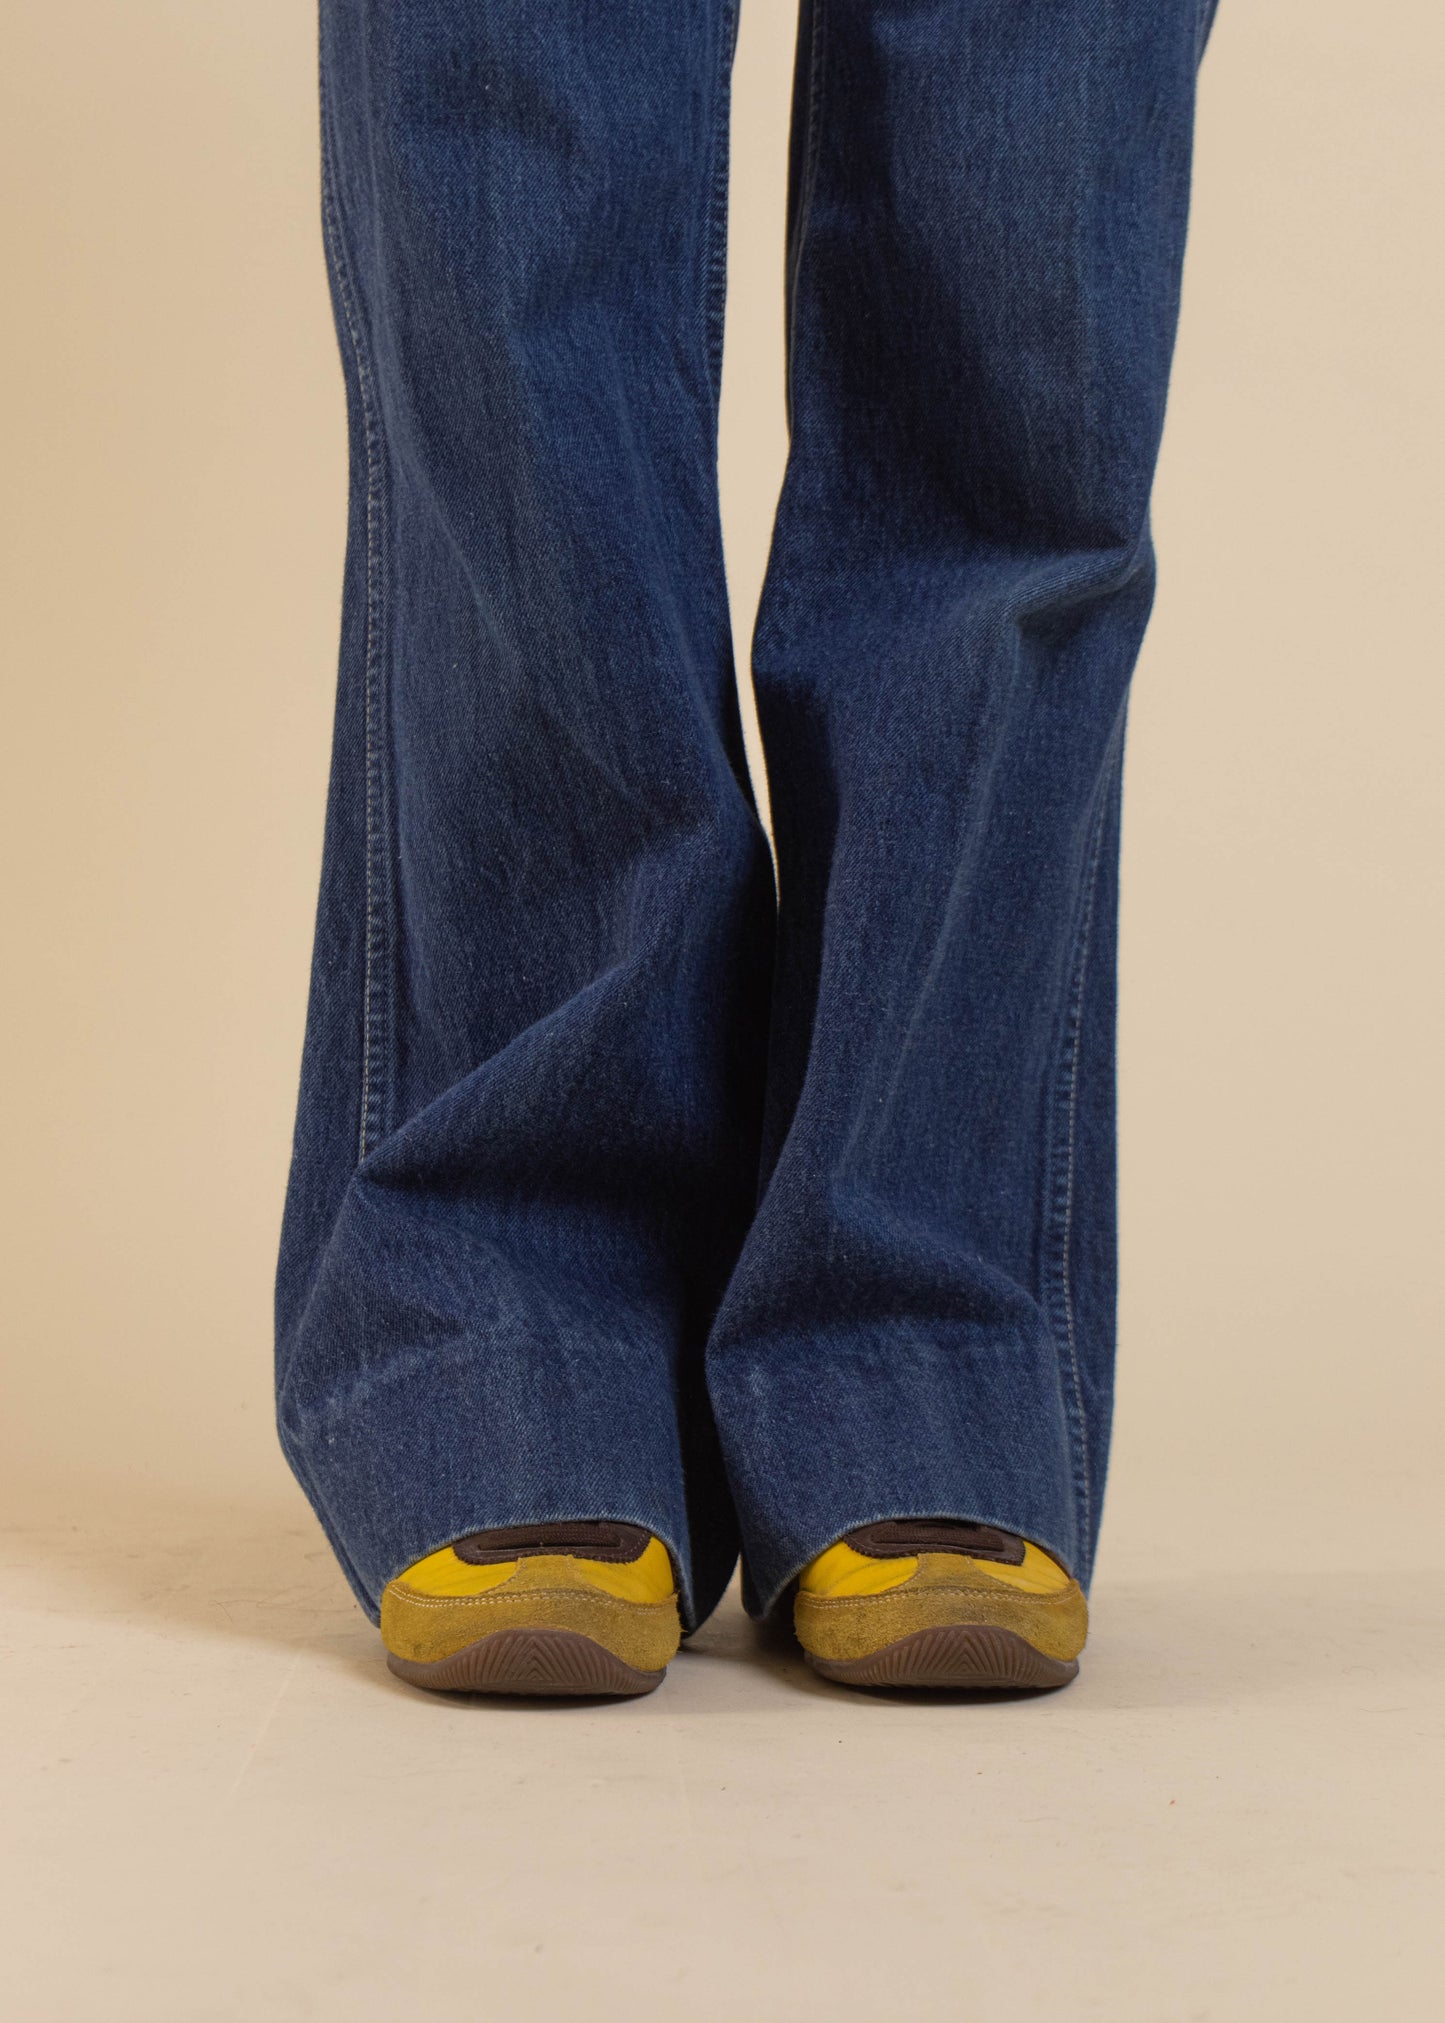 1980s Lois Darkwash Flare Jeans Size Women's 29 Men's 32